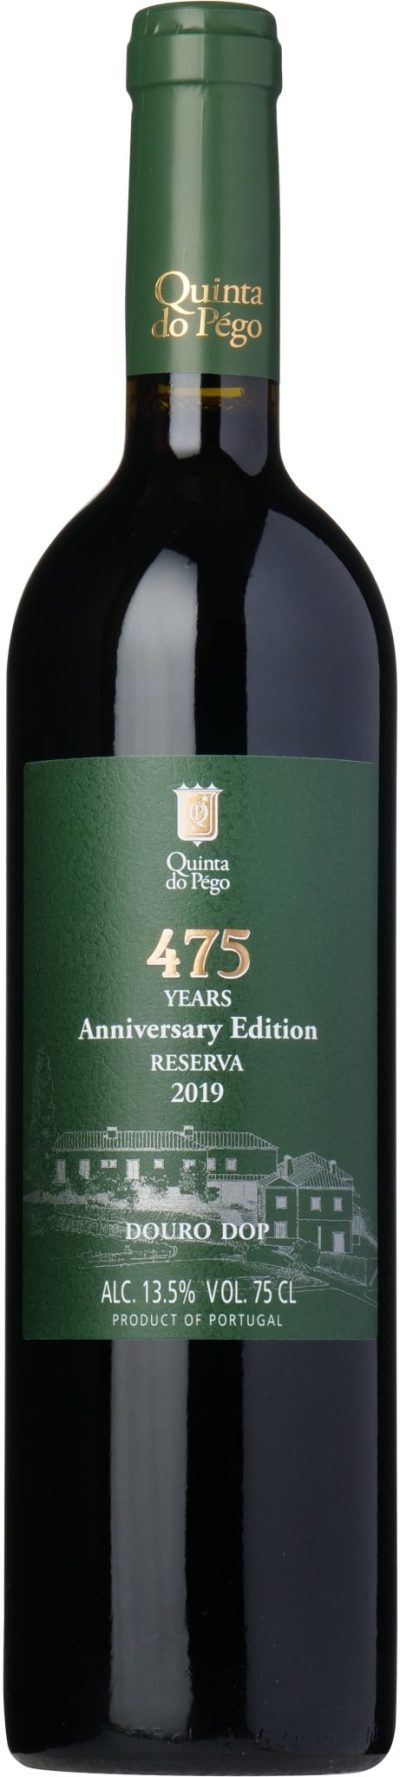 Quinta do Pégo Reserva Douro D.O.P 2019 475 Years Anniversary Edition